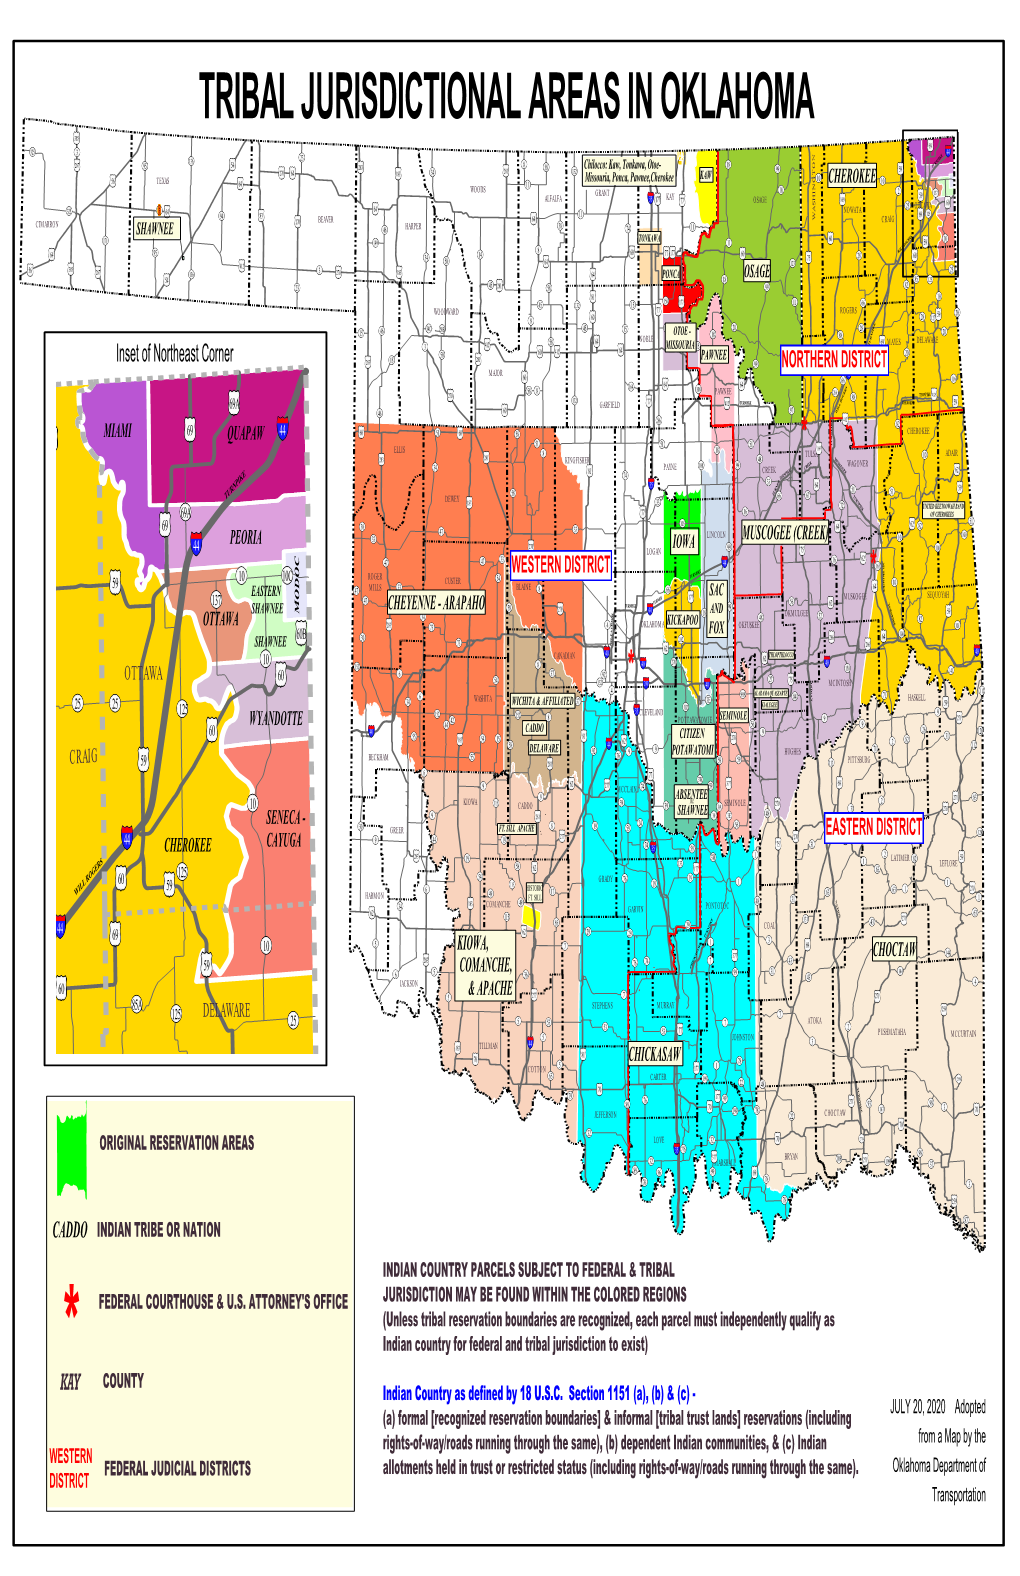 Tribal Jurisdictional Areas in Oklahoma